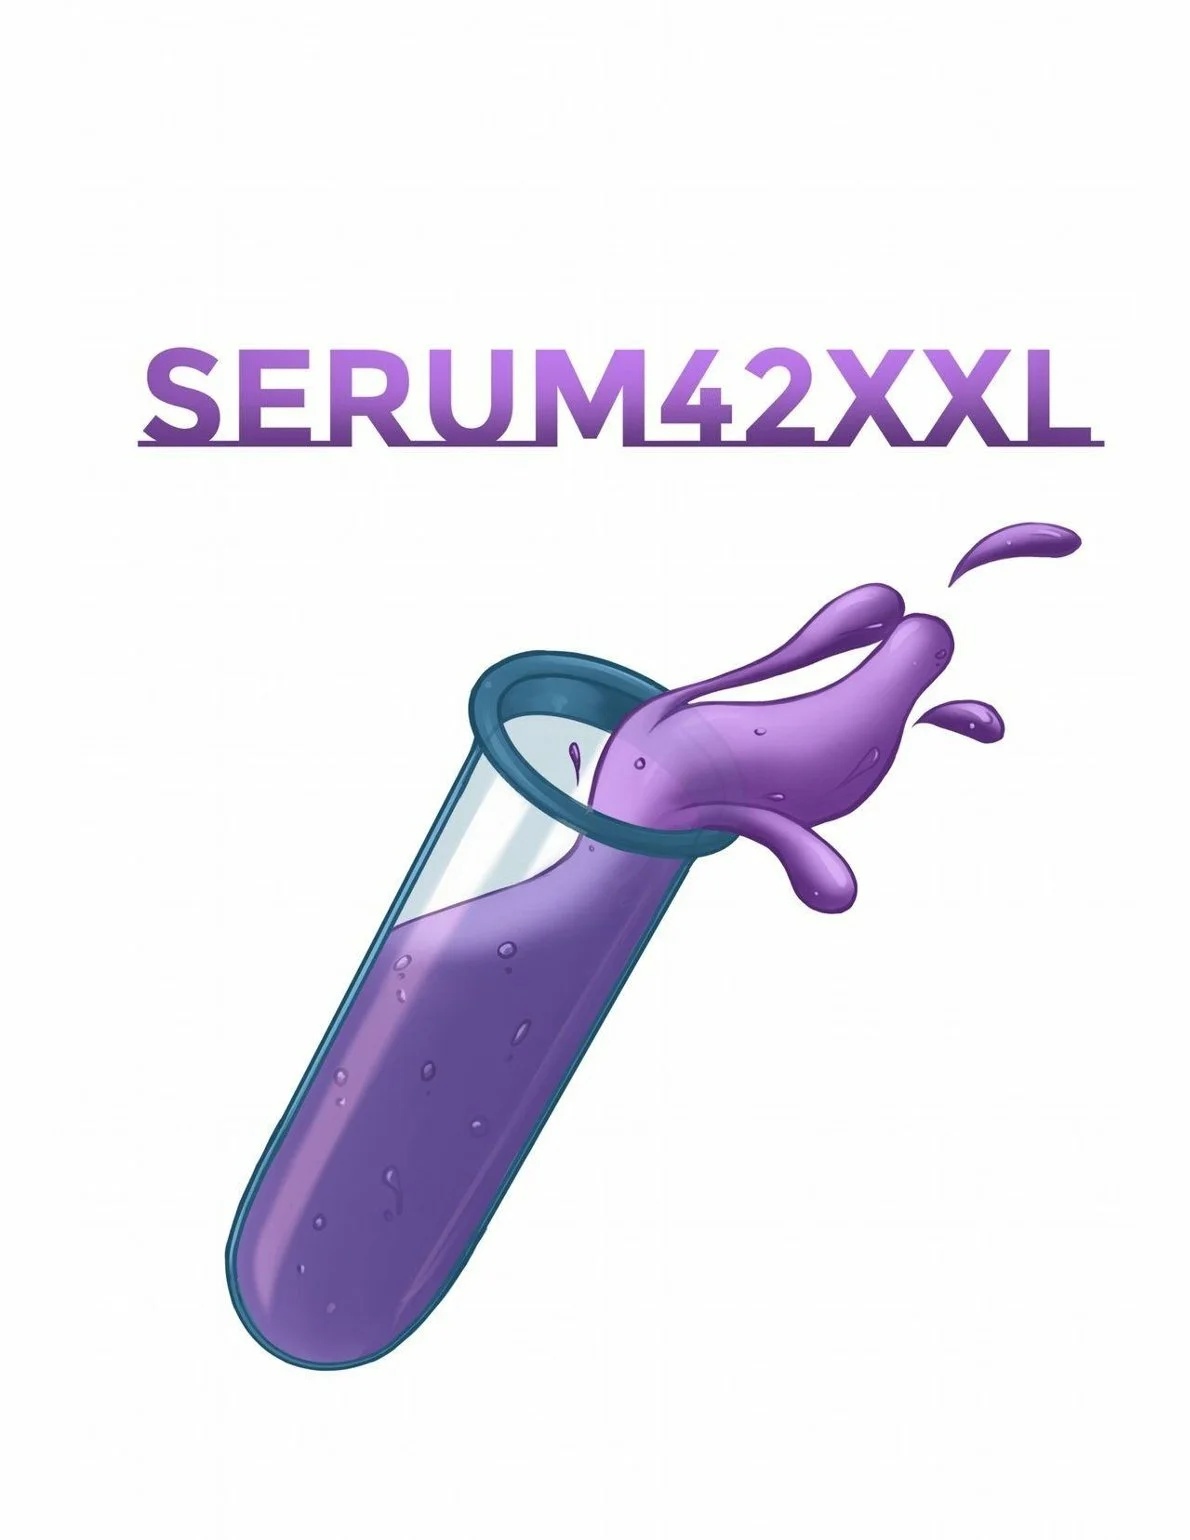 Serum42XXL (completo) - 31